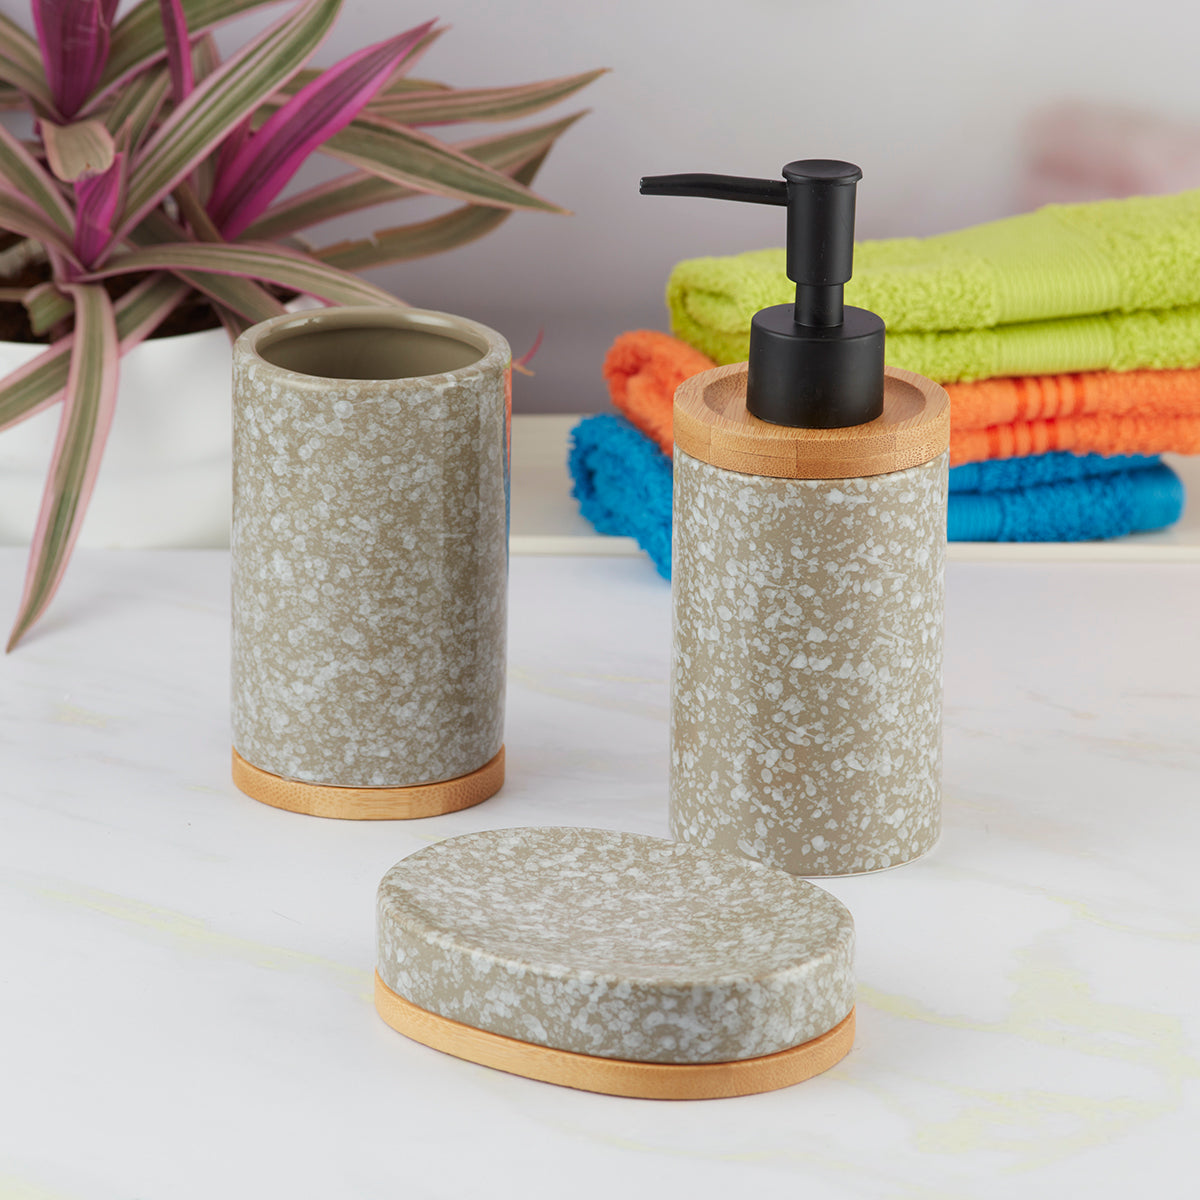 Ceramic Bathroom Accessories Set of 3 Bath Set with Soap Dispenser (9617)